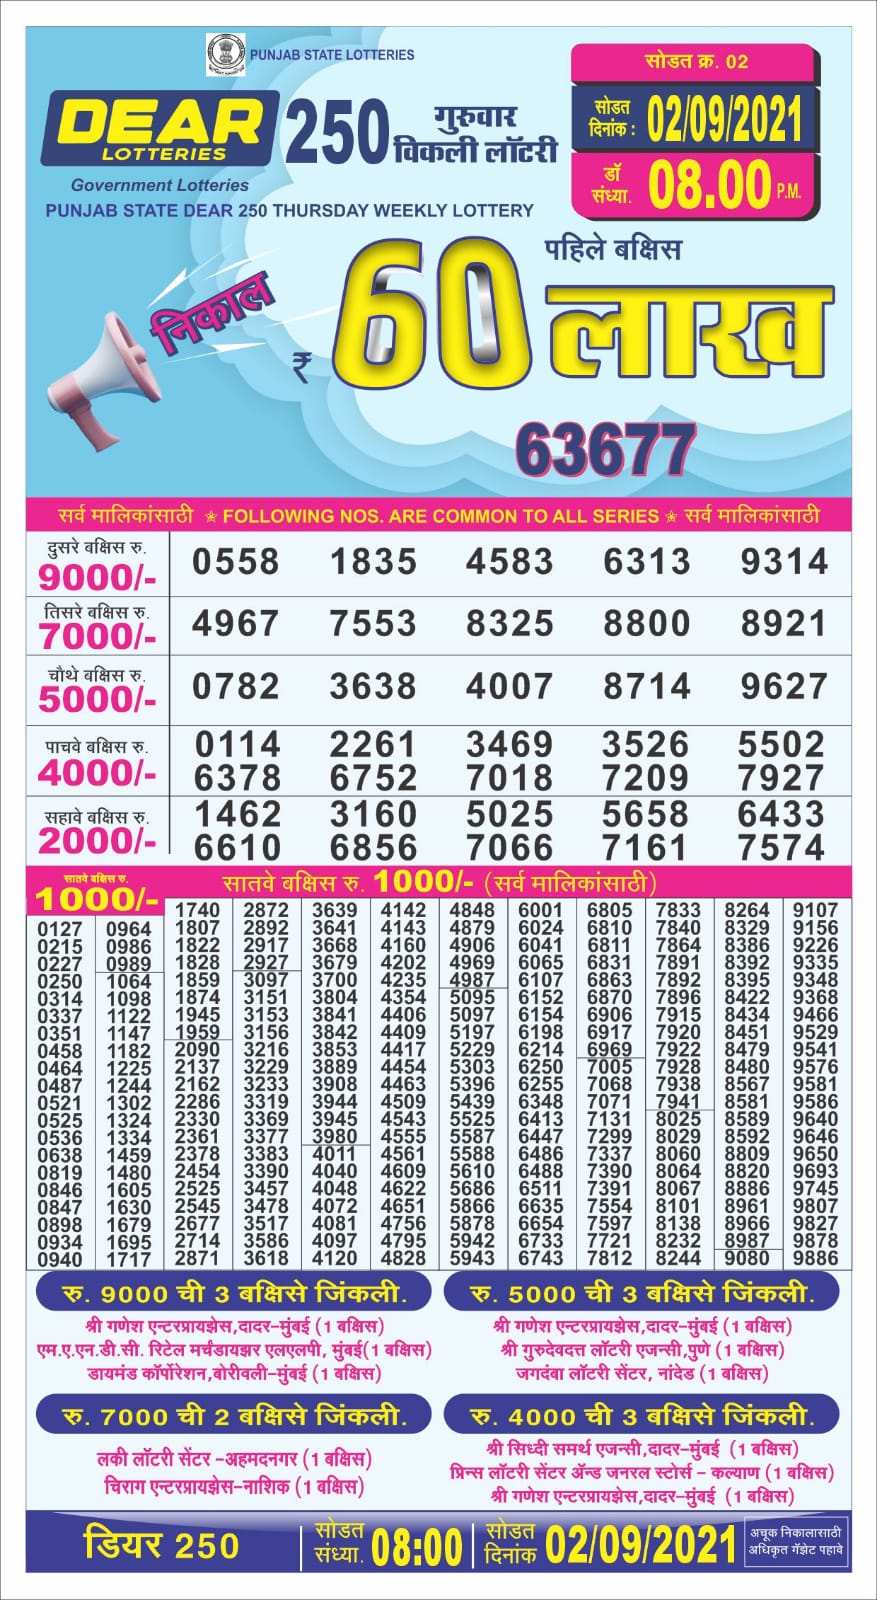 Dear 250 Weekly lottery result 02 september 2021